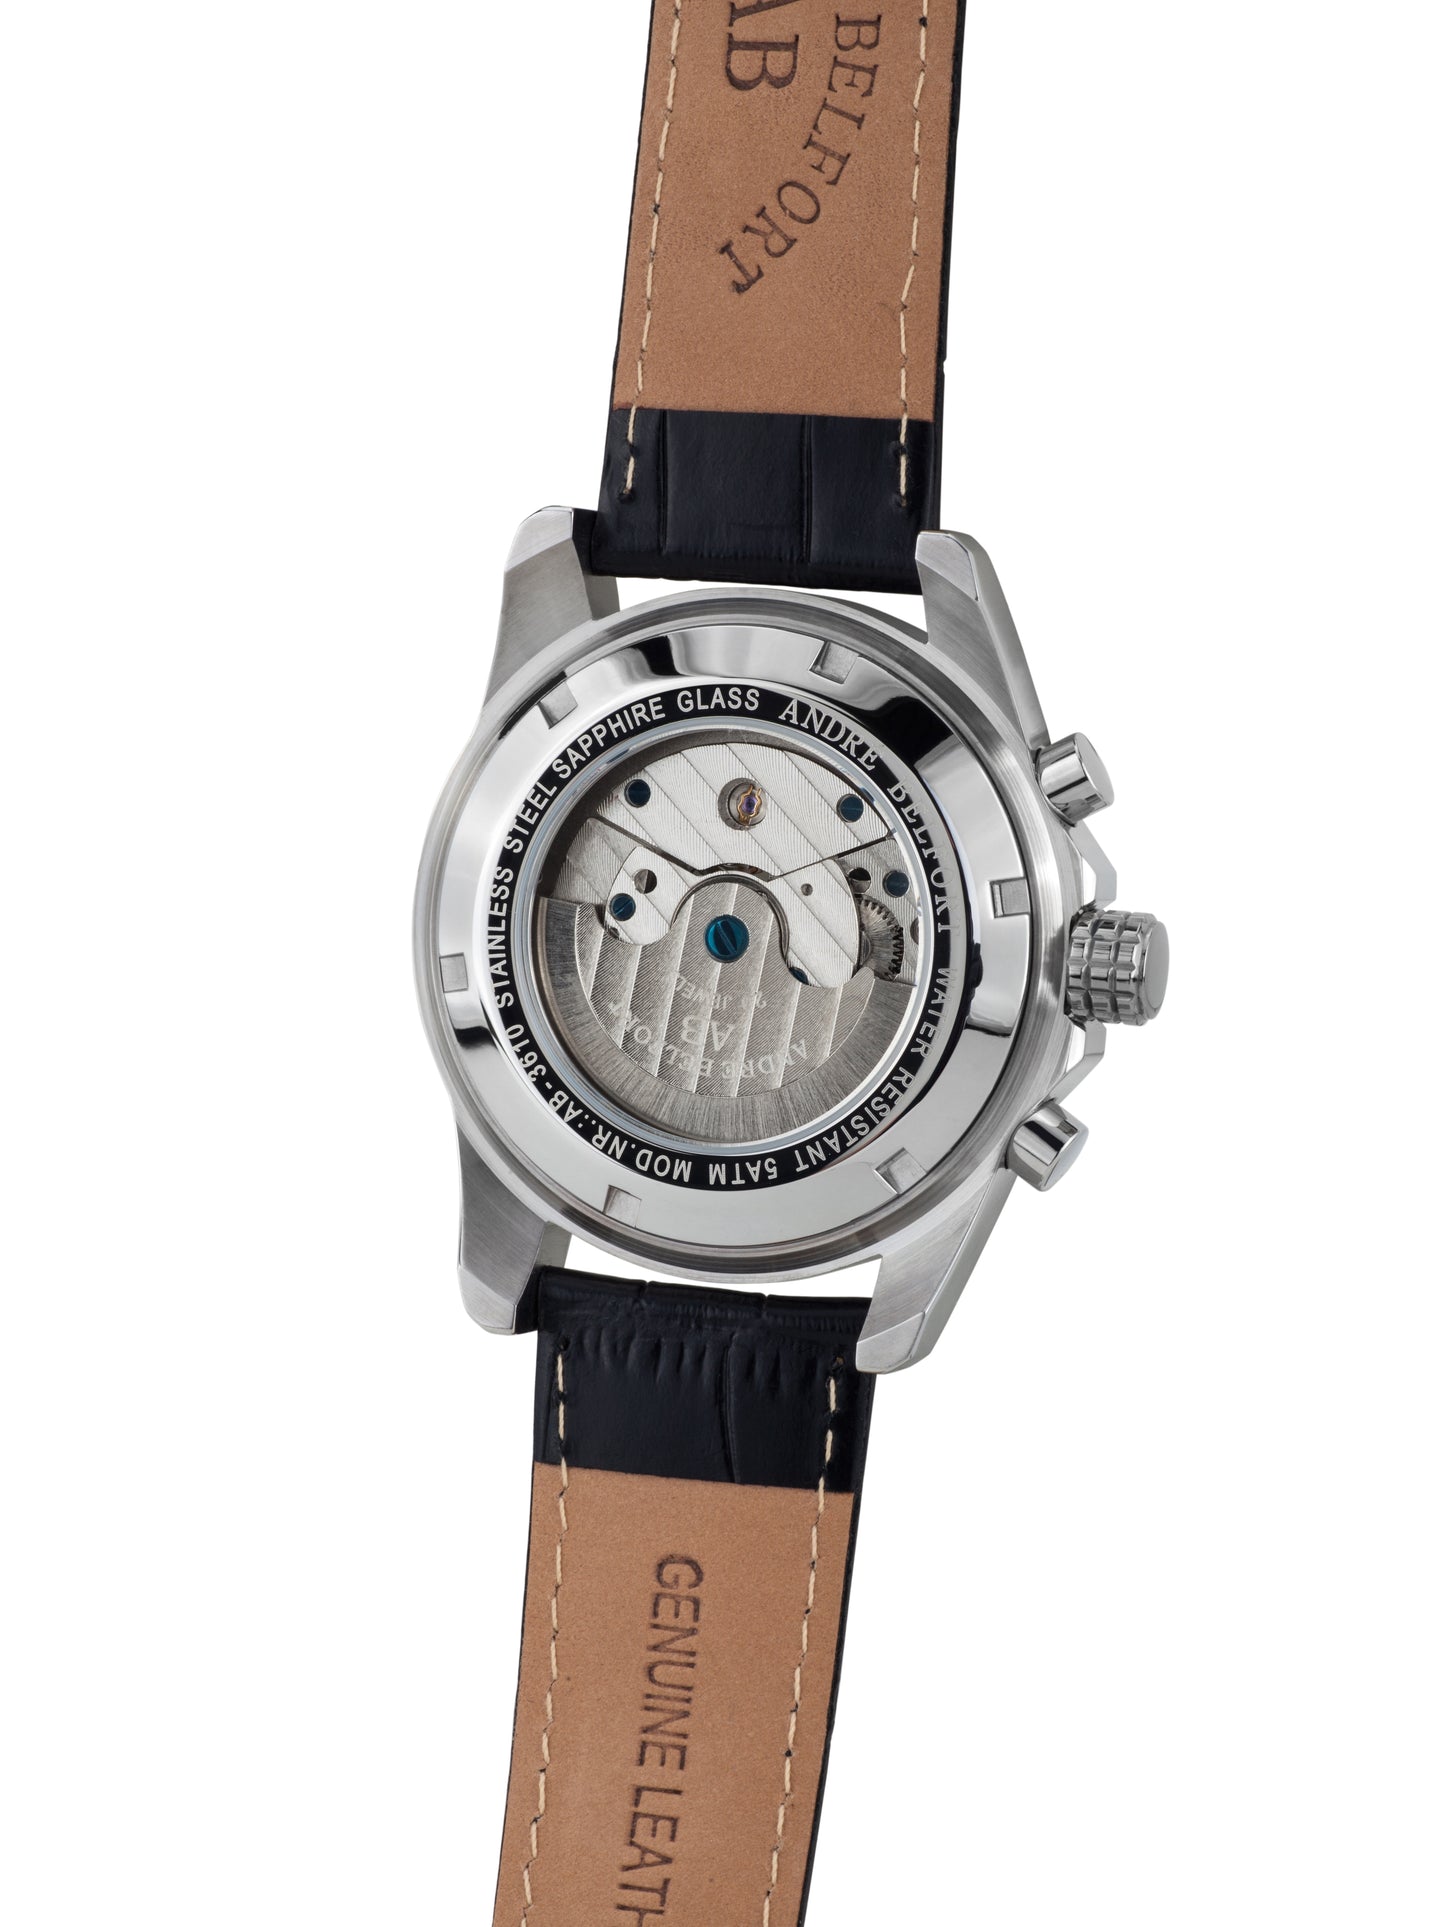 Automatic watches — Galactique — André Belfort — orange